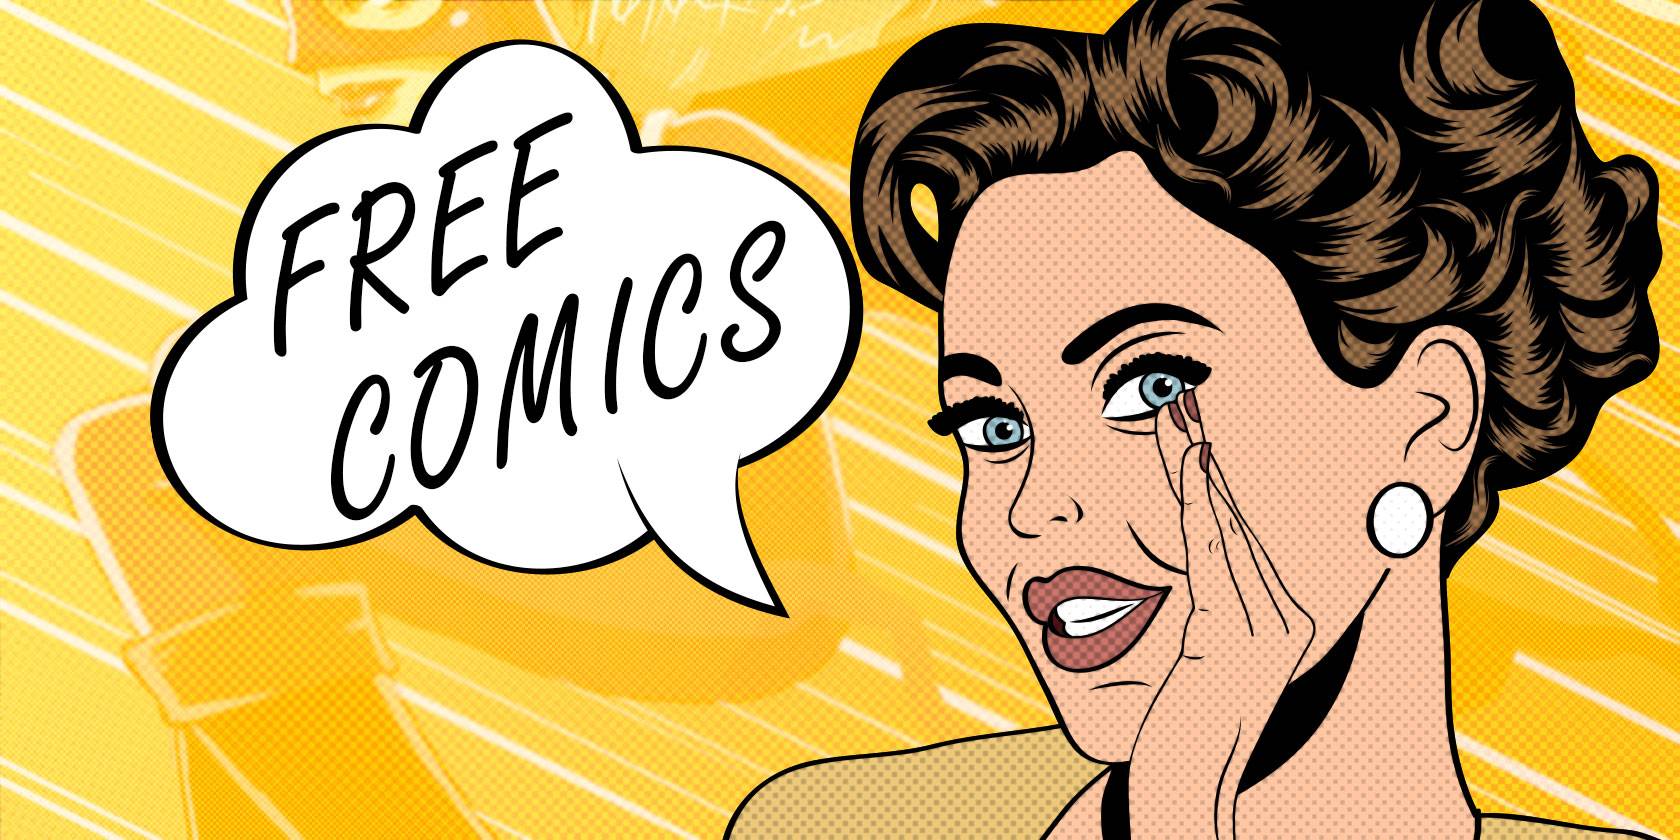 Free comics reading site